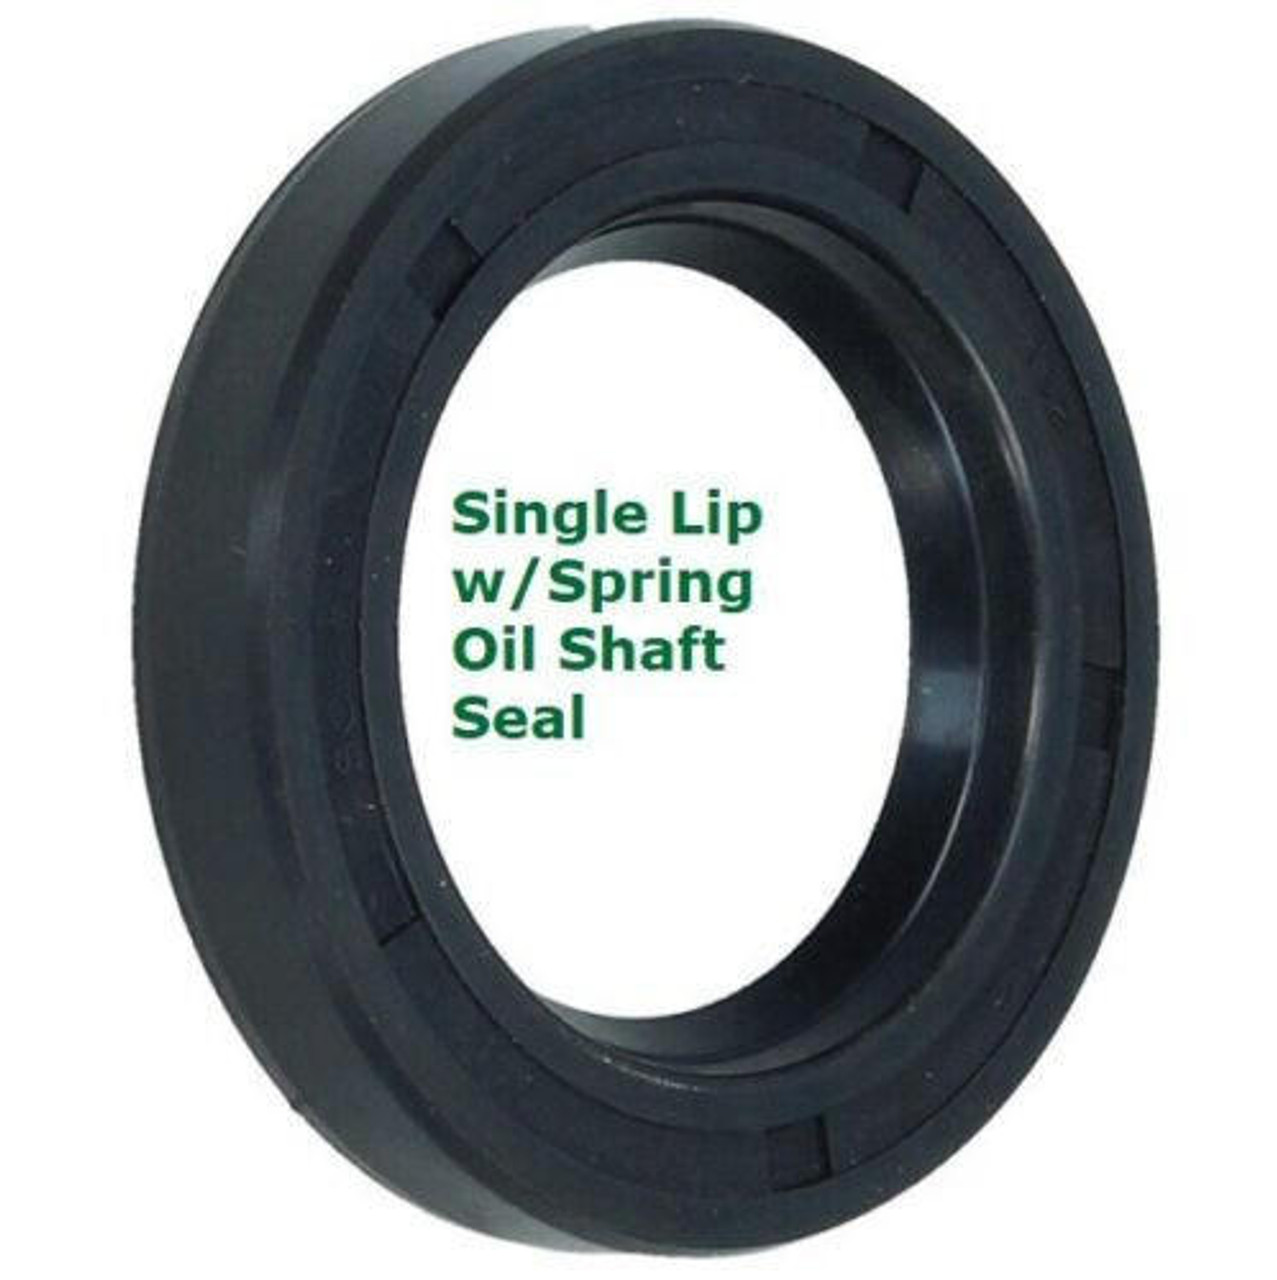 Metric Oil Shaft Seal 135 x 170 x 15mm   Single Lip   Price for 1 pc